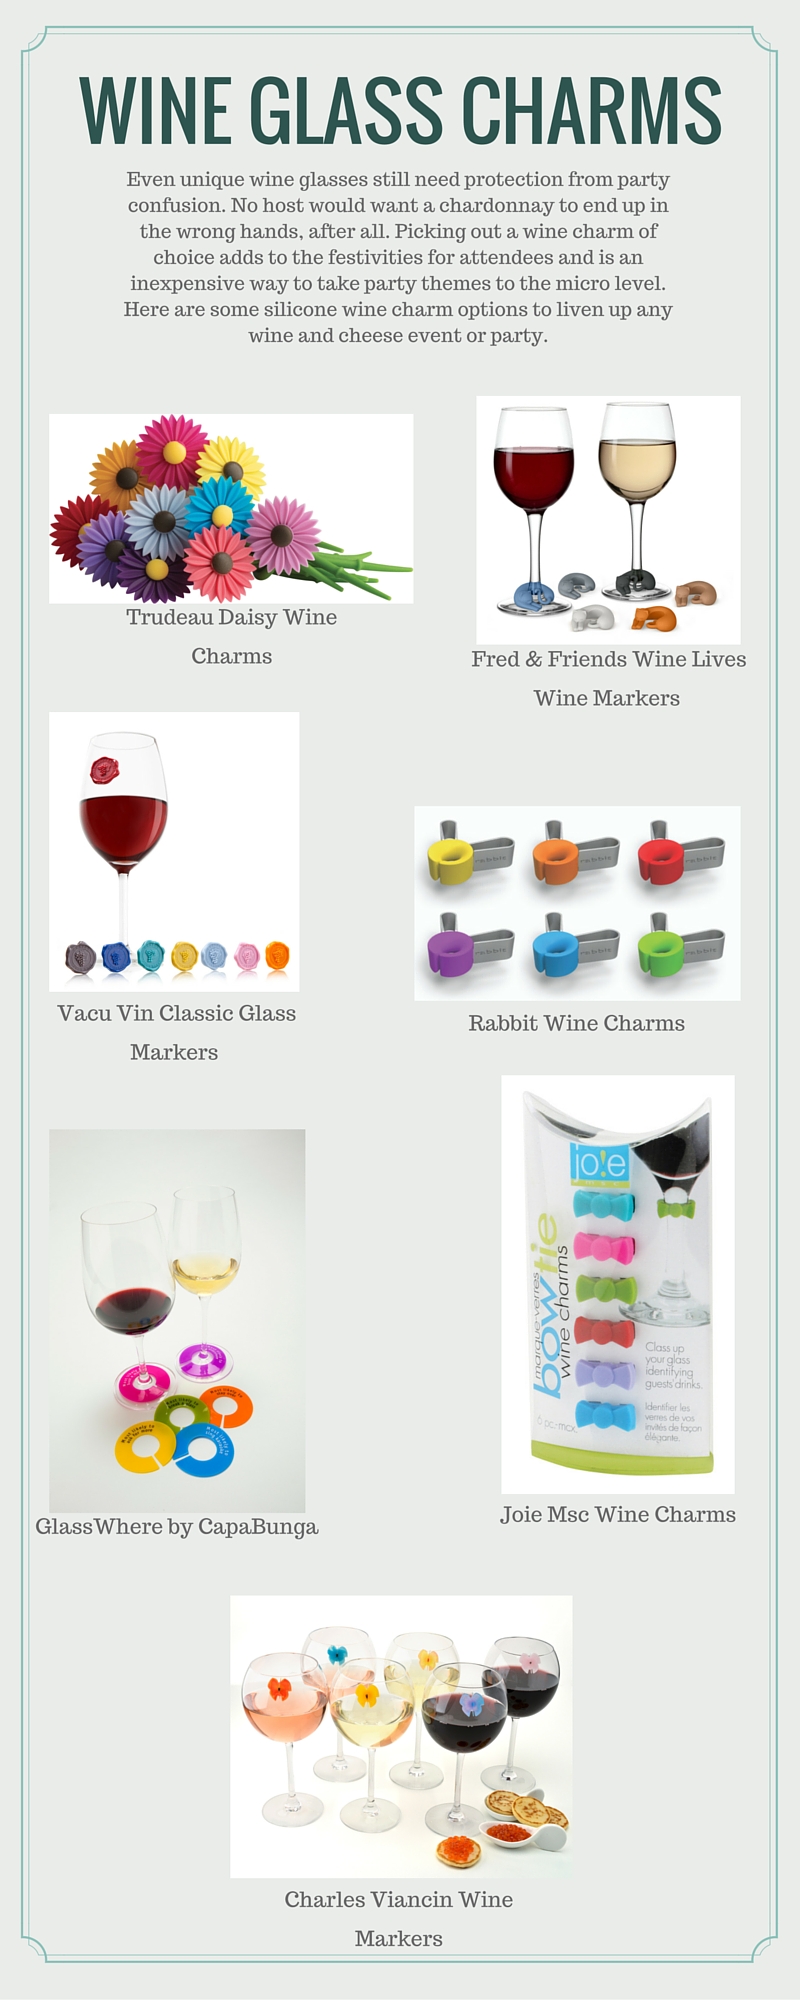 https://www.kitchenwarenews.com/wp-content/uploads/2015/09/Wine-Glass-Charms-1.jpg